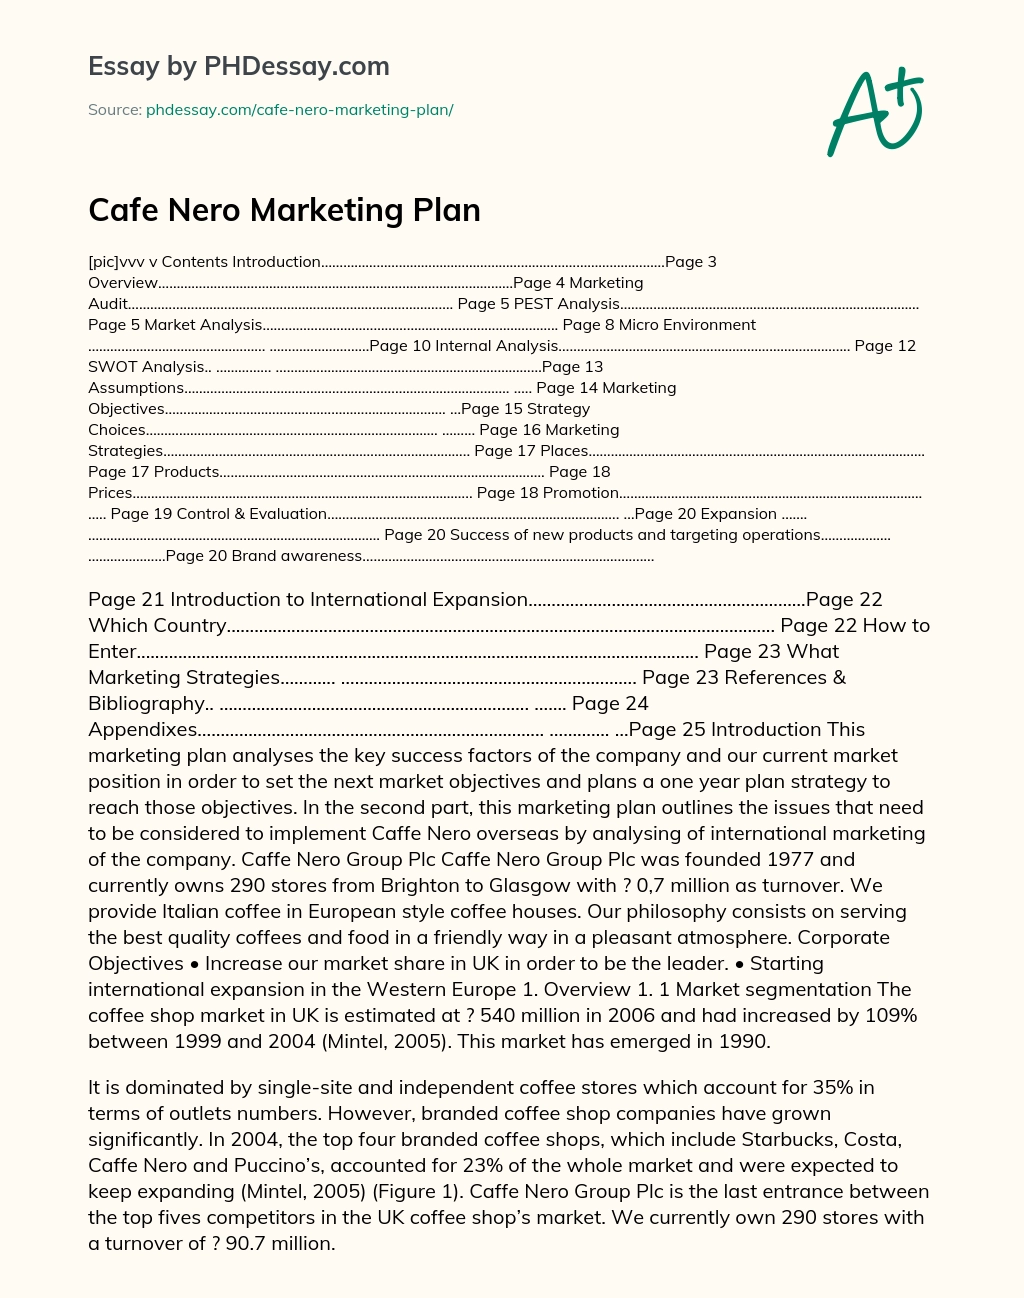 Cafe Nero marketing plan essay